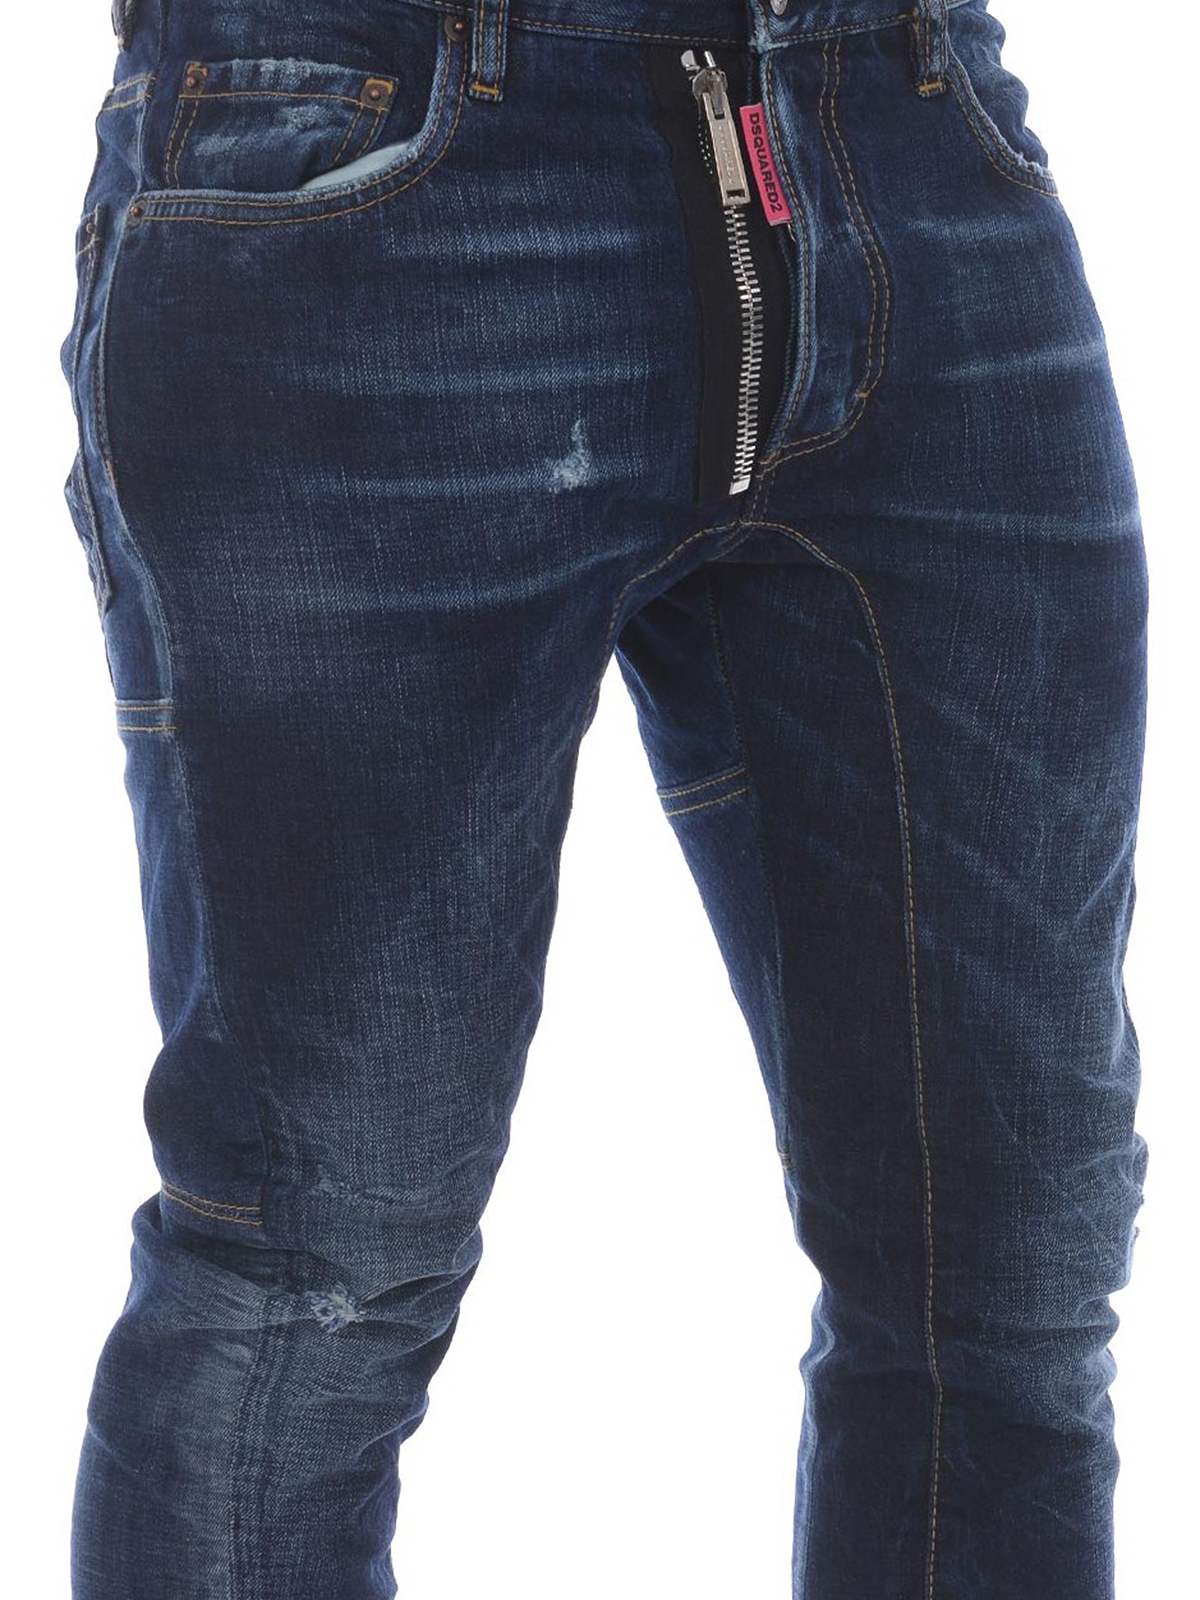 Nice cotton jeans - straight leg jeans 